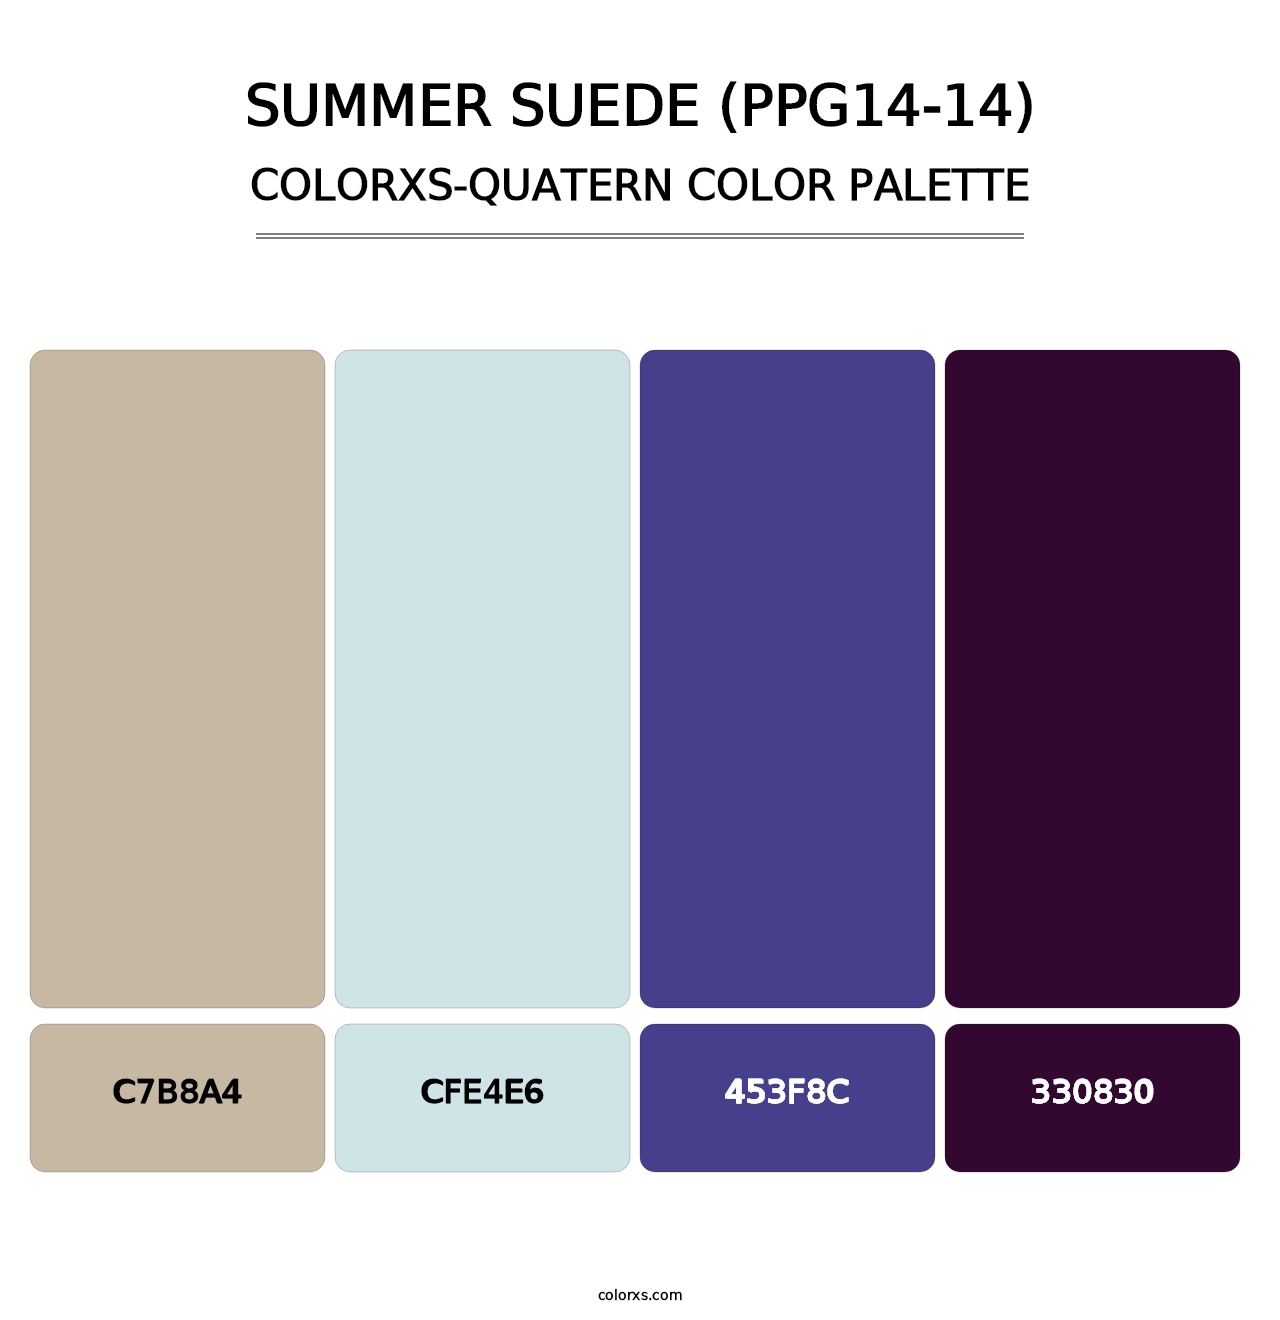 Summer Suede (PPG14-14) - Colorxs Quatern Palette